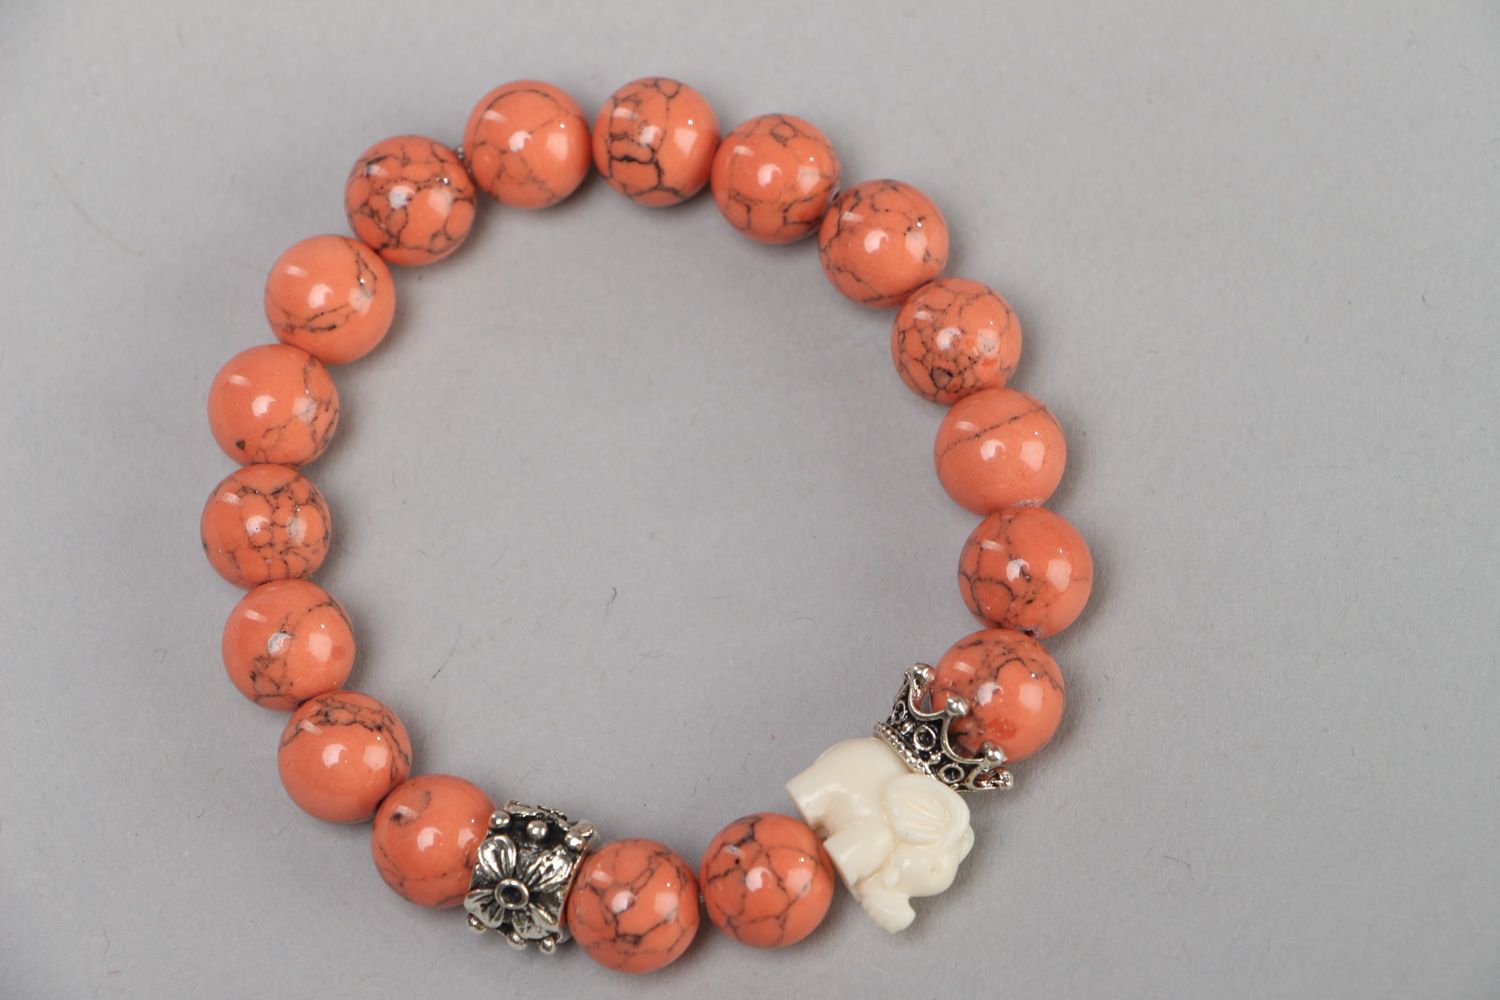 Handmade stretch wrist bracelet with natural coral beads and elephant figurine photo 2